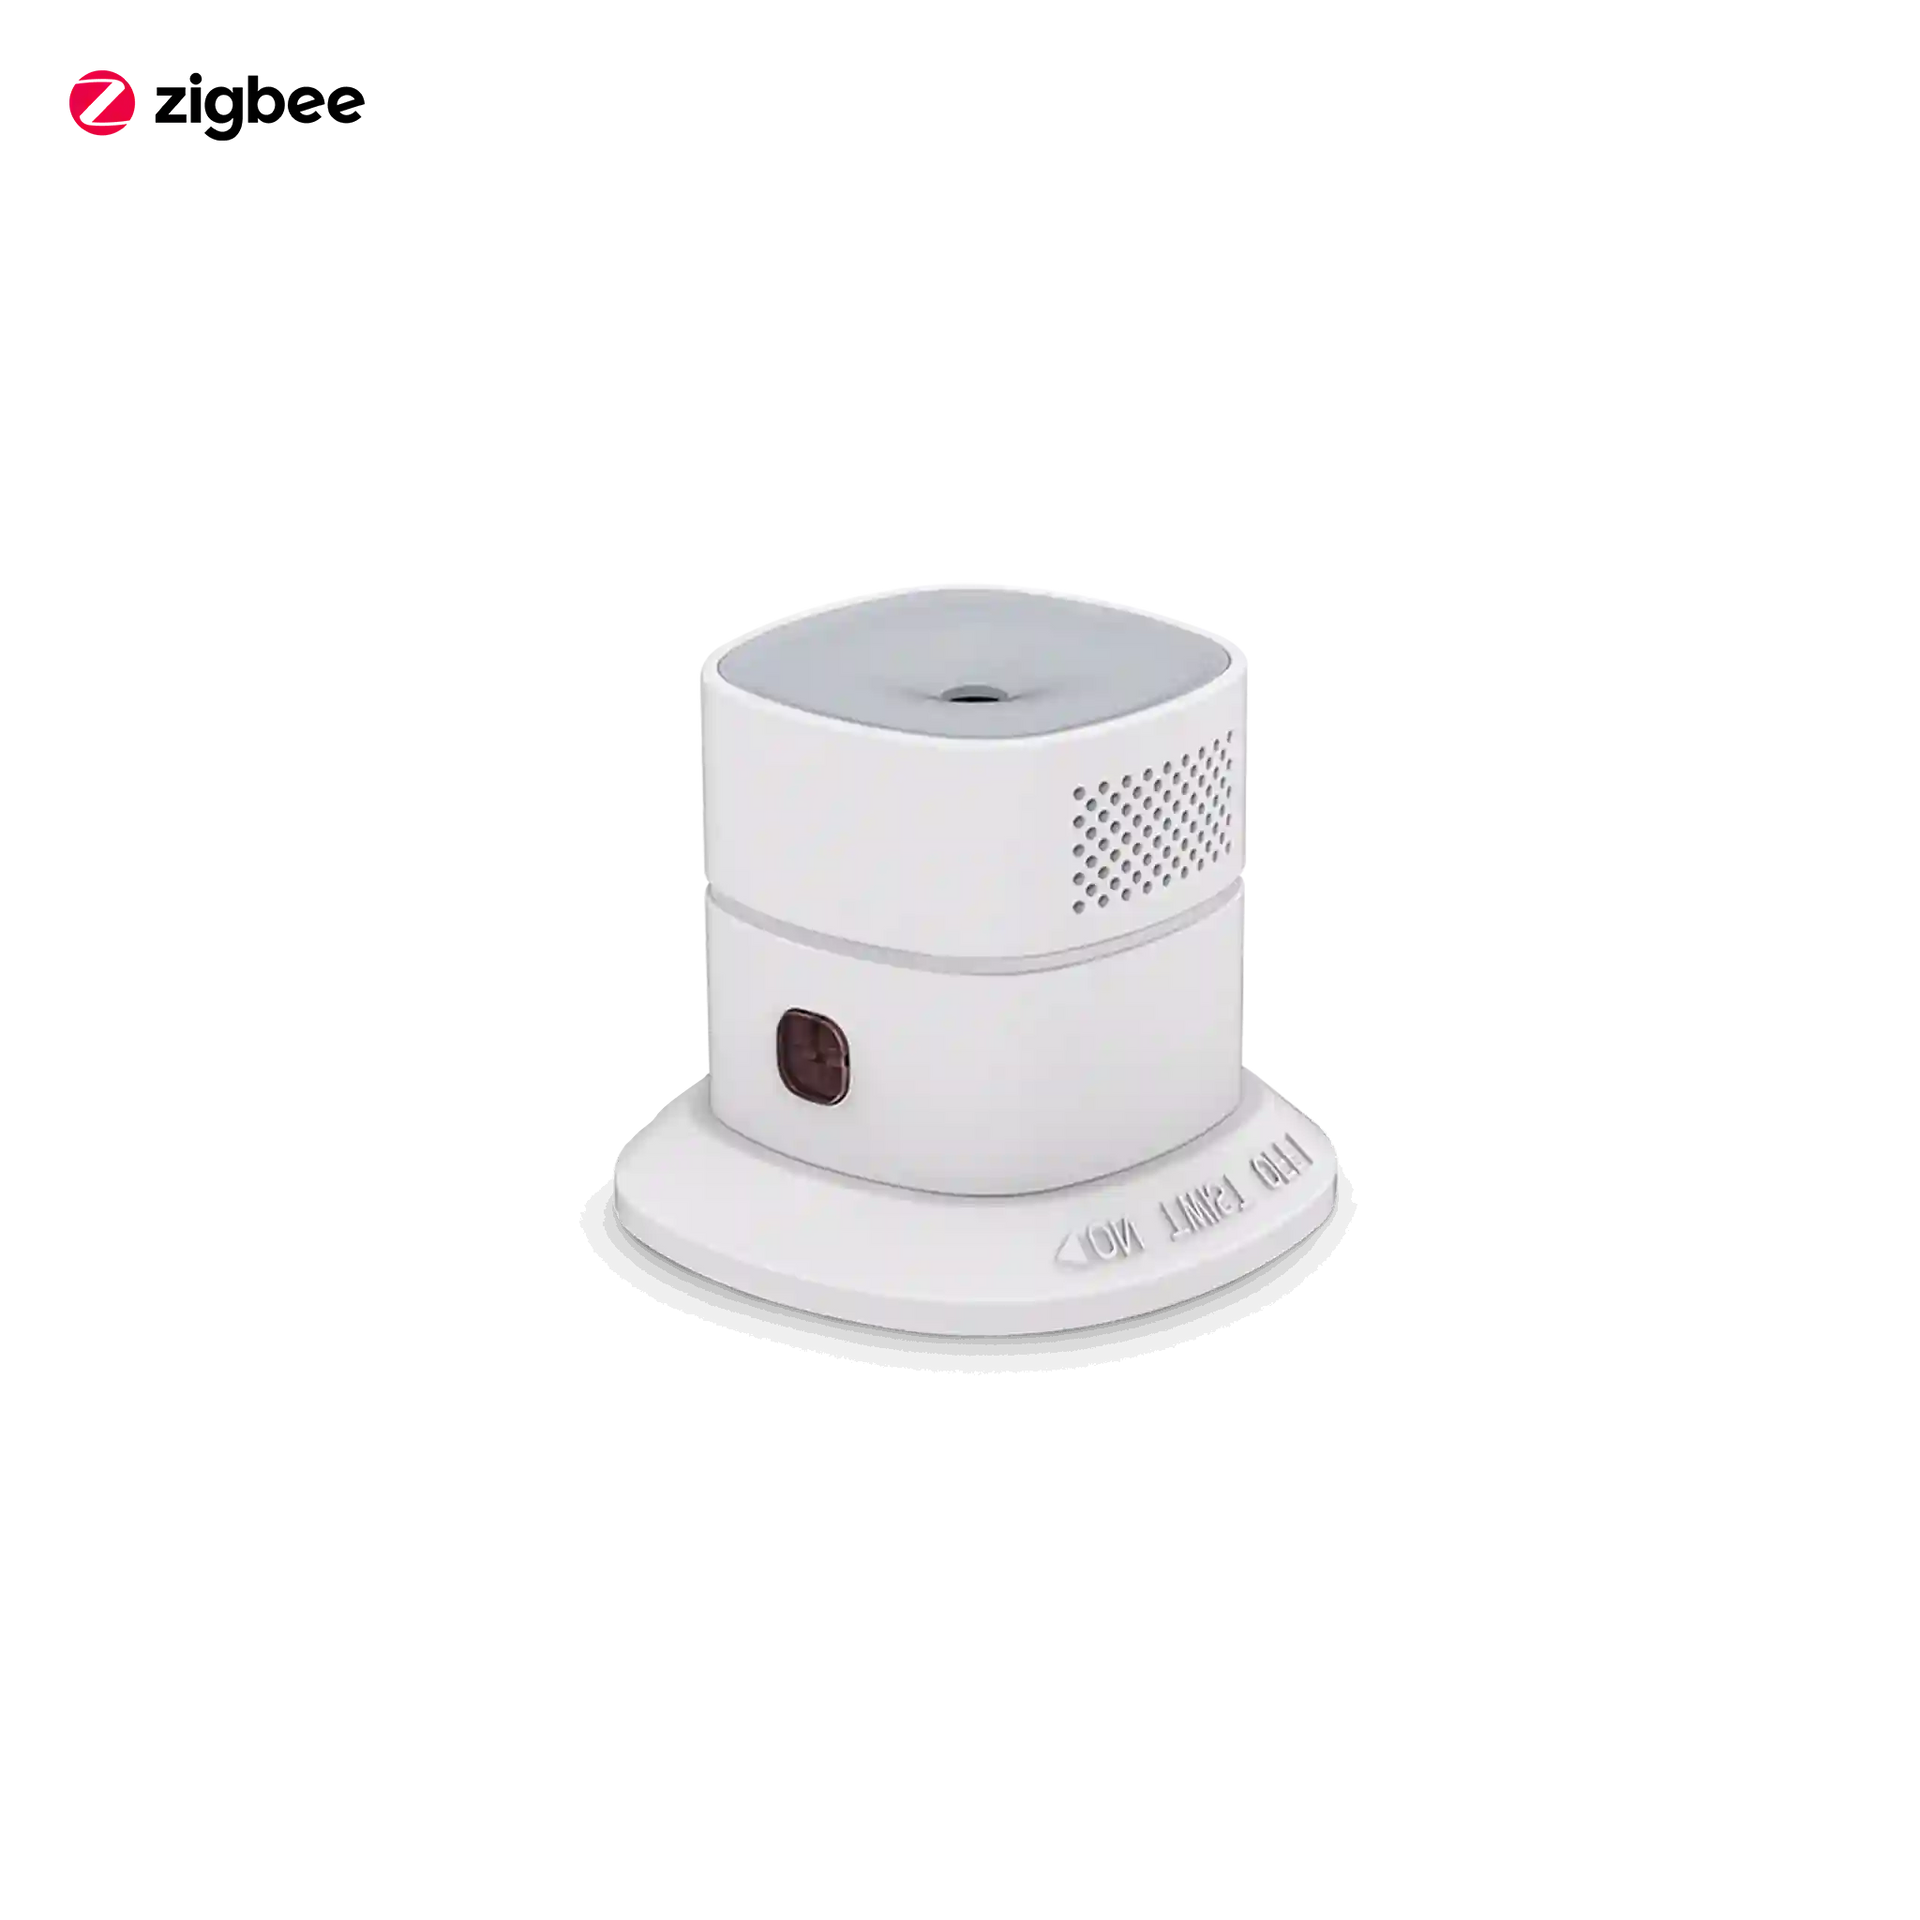 Smart Carbon Monoxide Sensor - Zigbee 